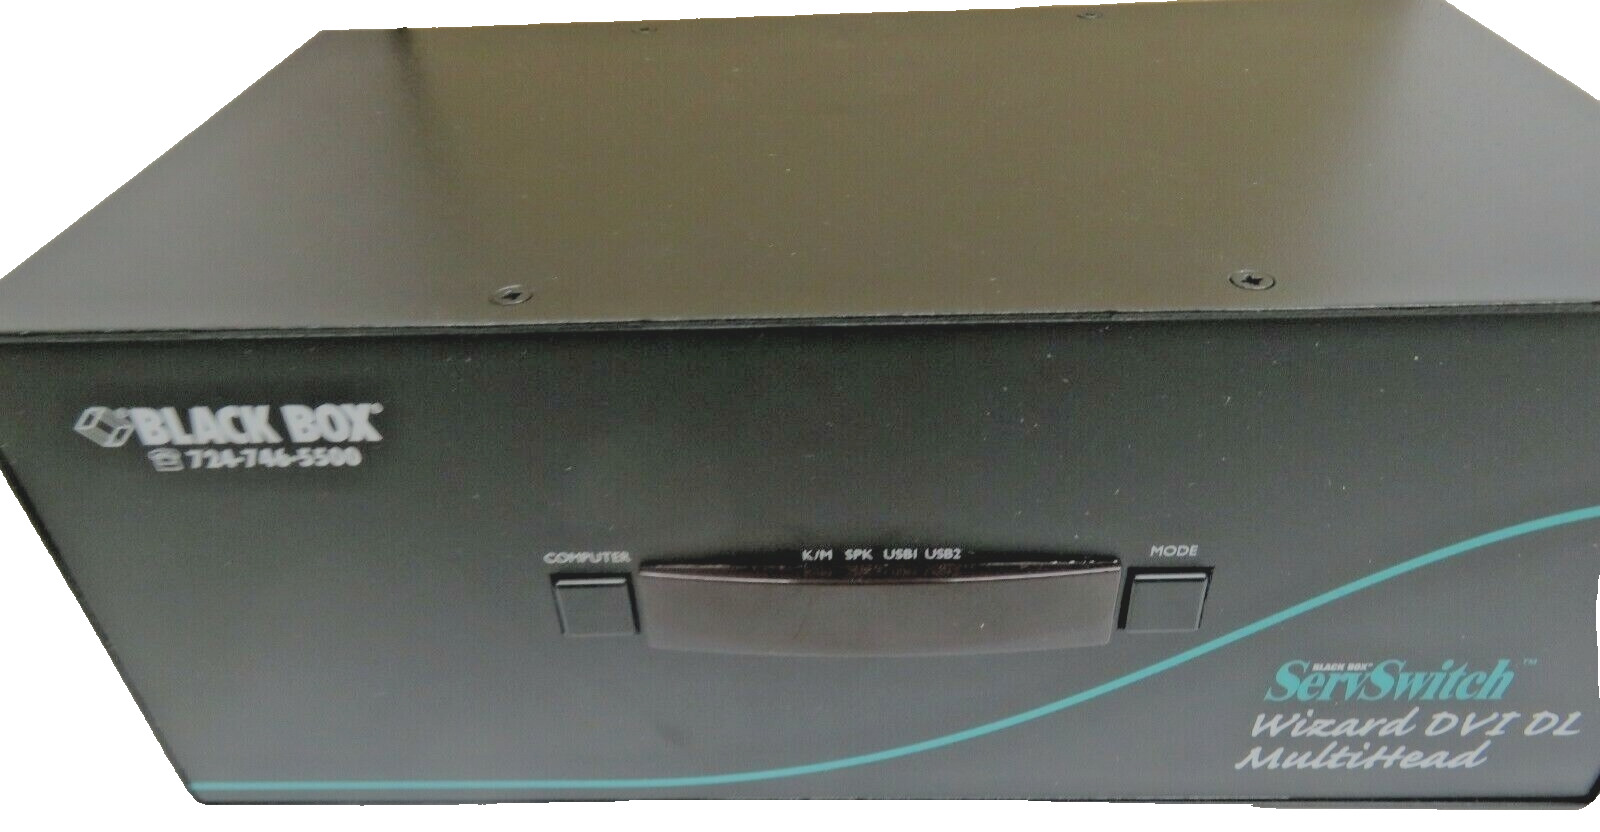 Black Box ServSwitch Wizard Dual-Link DVI Quad-Head with USB True Emulation